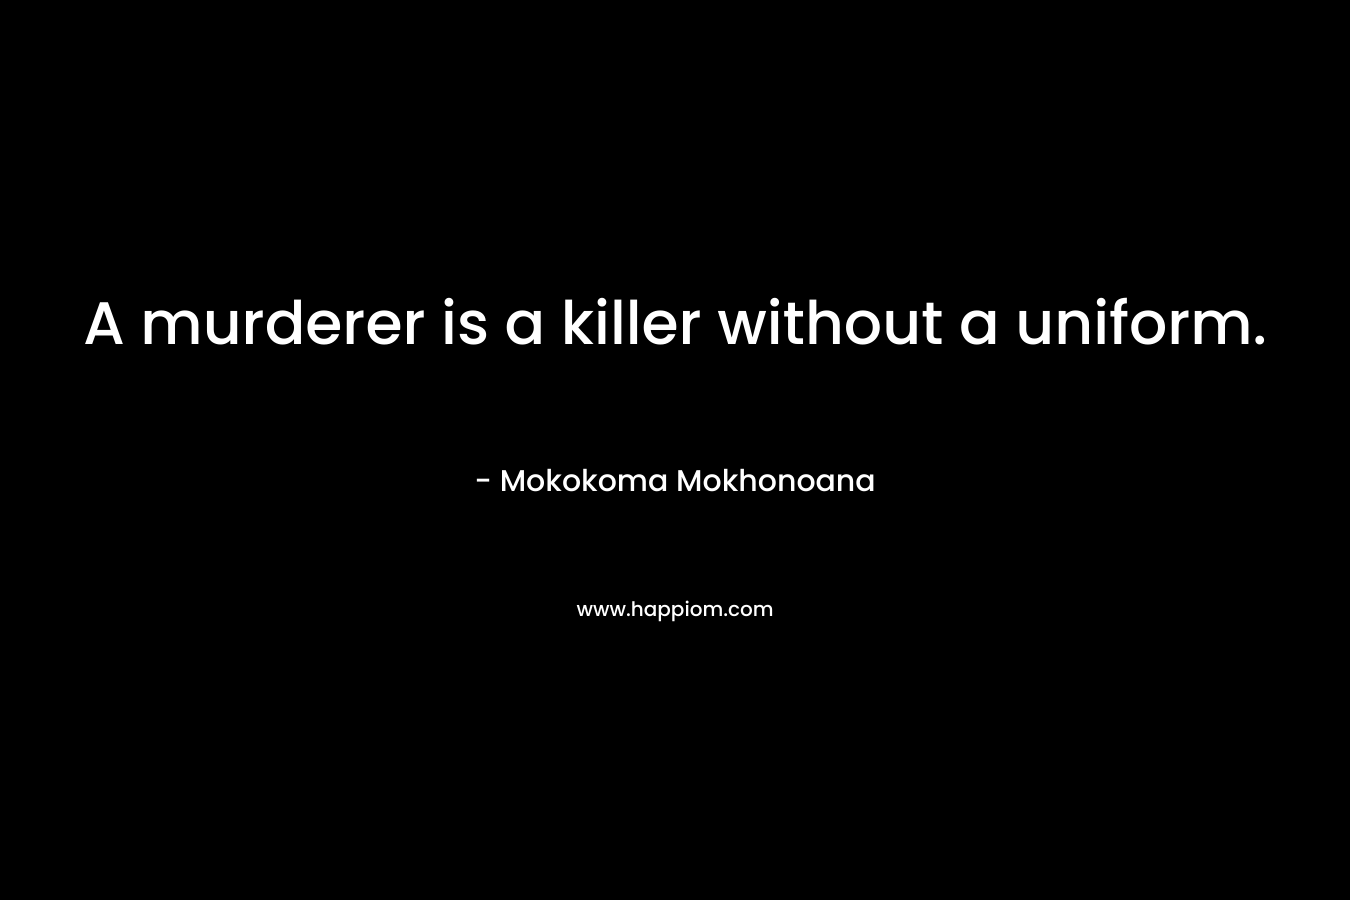 A murderer is a killer without a uniform.